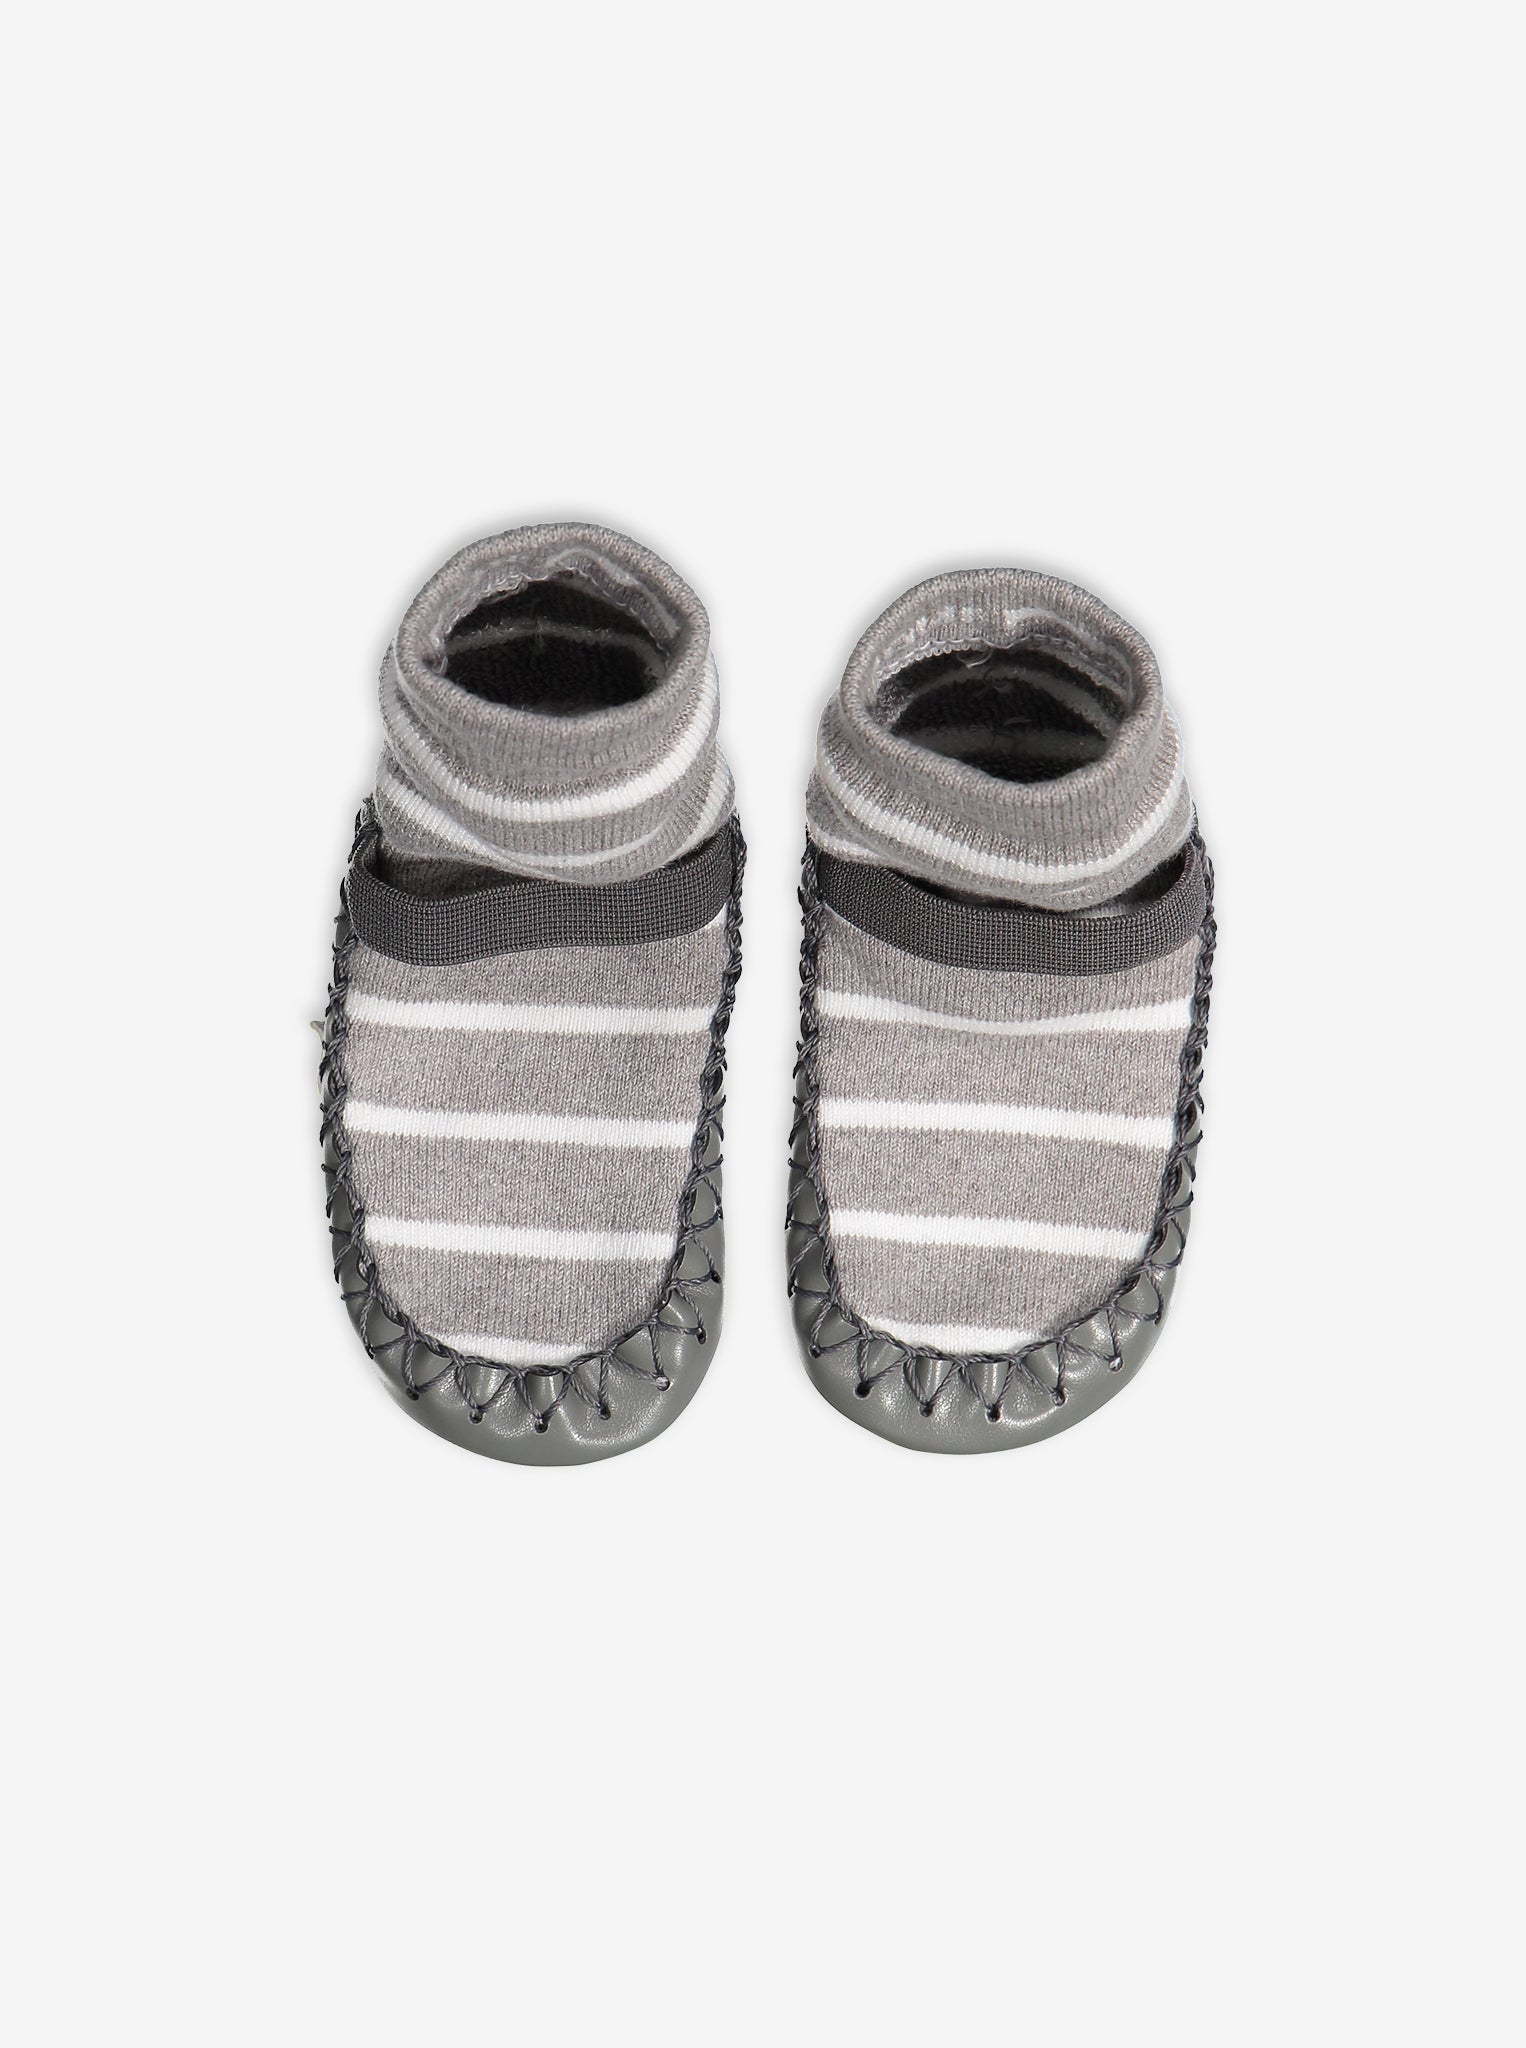 PO.P classic grey and white striped Moccasin slipper sock